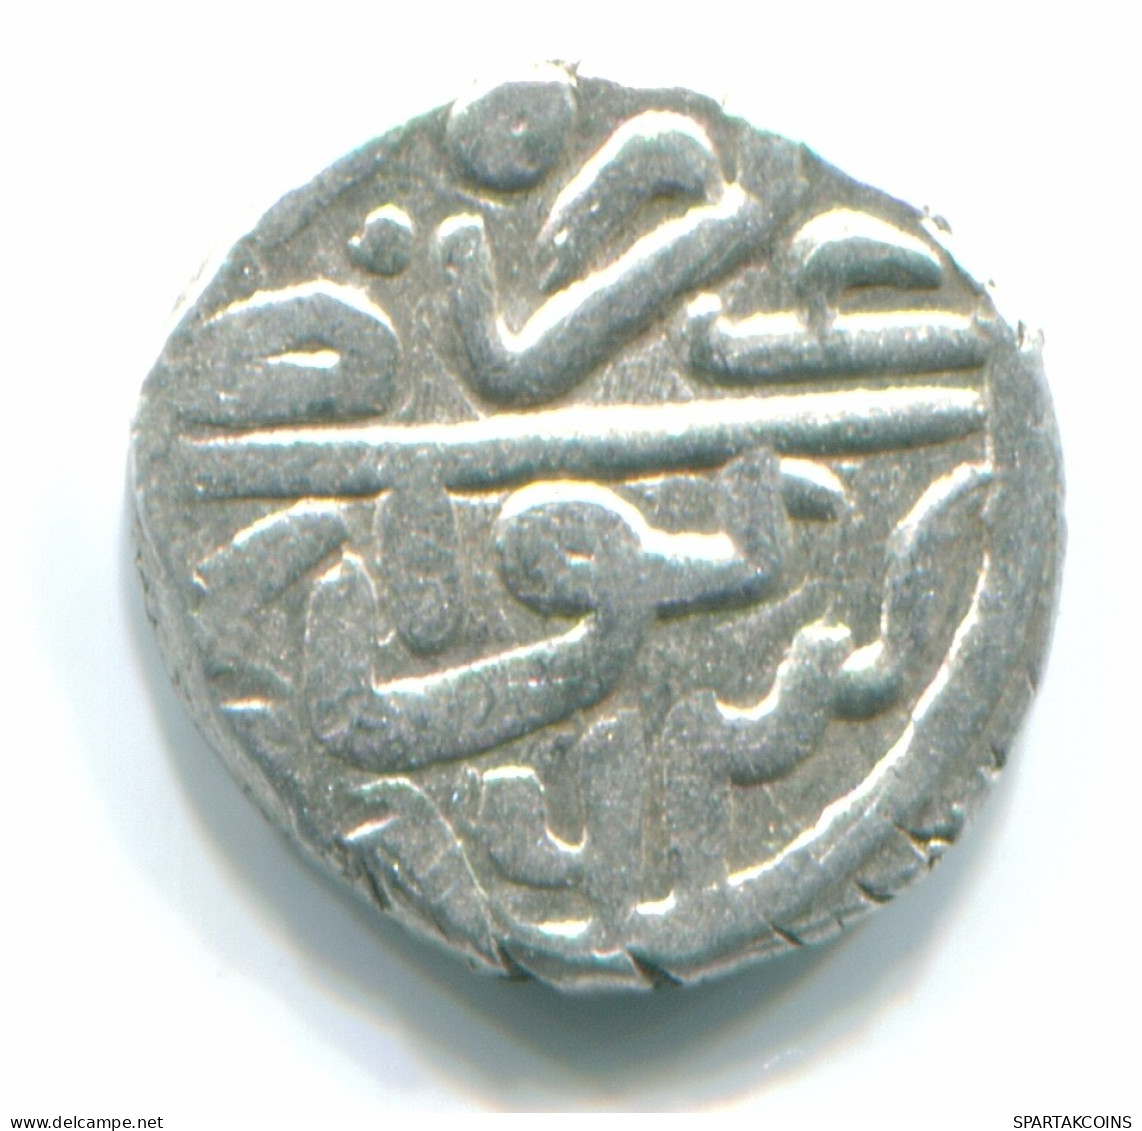 OTTOMAN EMPIRE BAYEZID II 1 Akce 1481-1512 AD Silver Islamic Coin #MED10022.7.D.A - Islamic